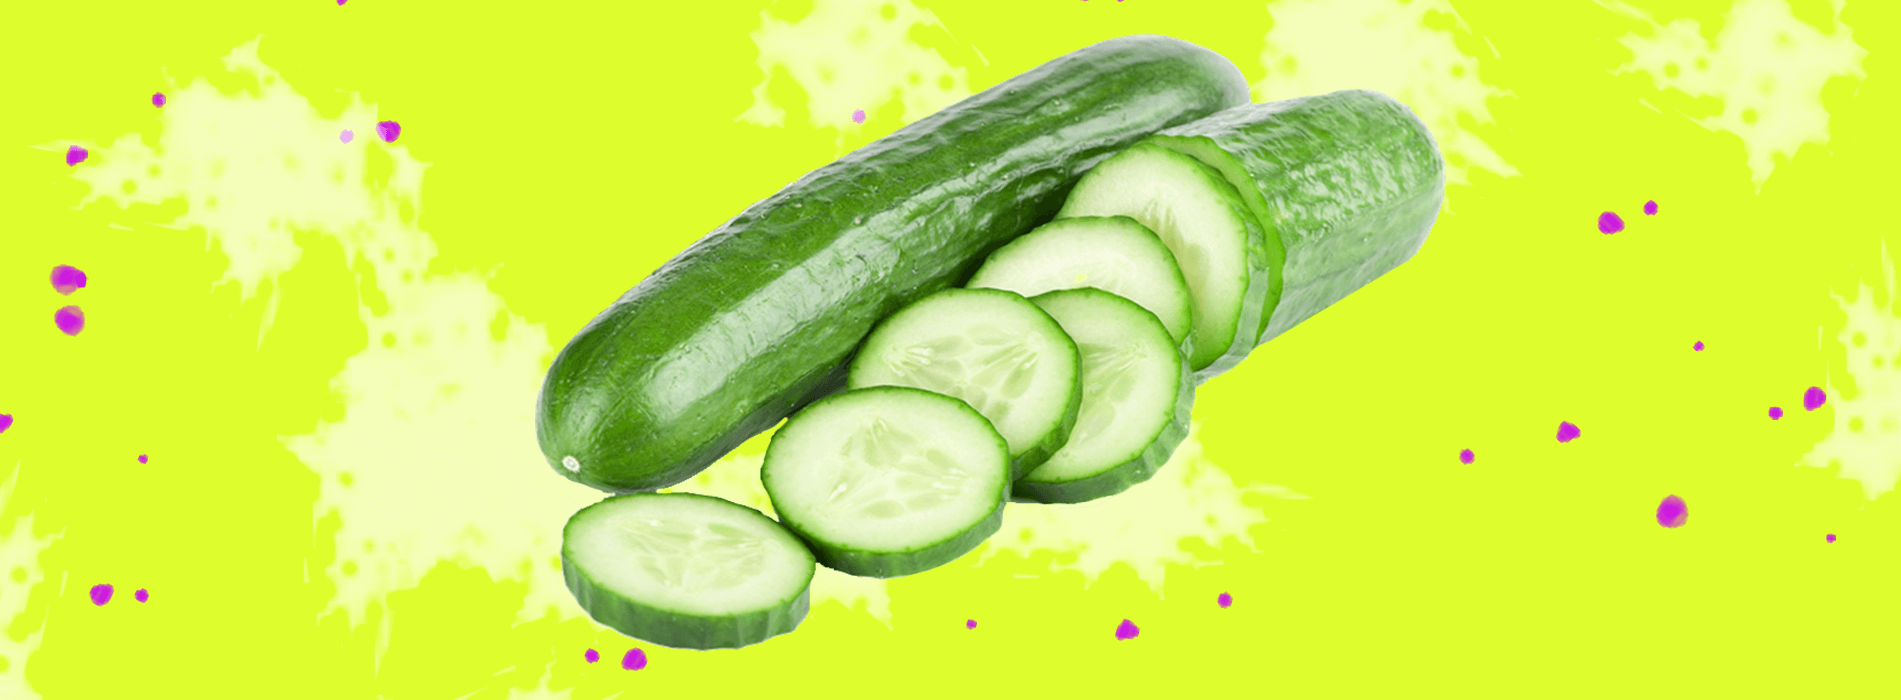 Fertilization plan cucumber